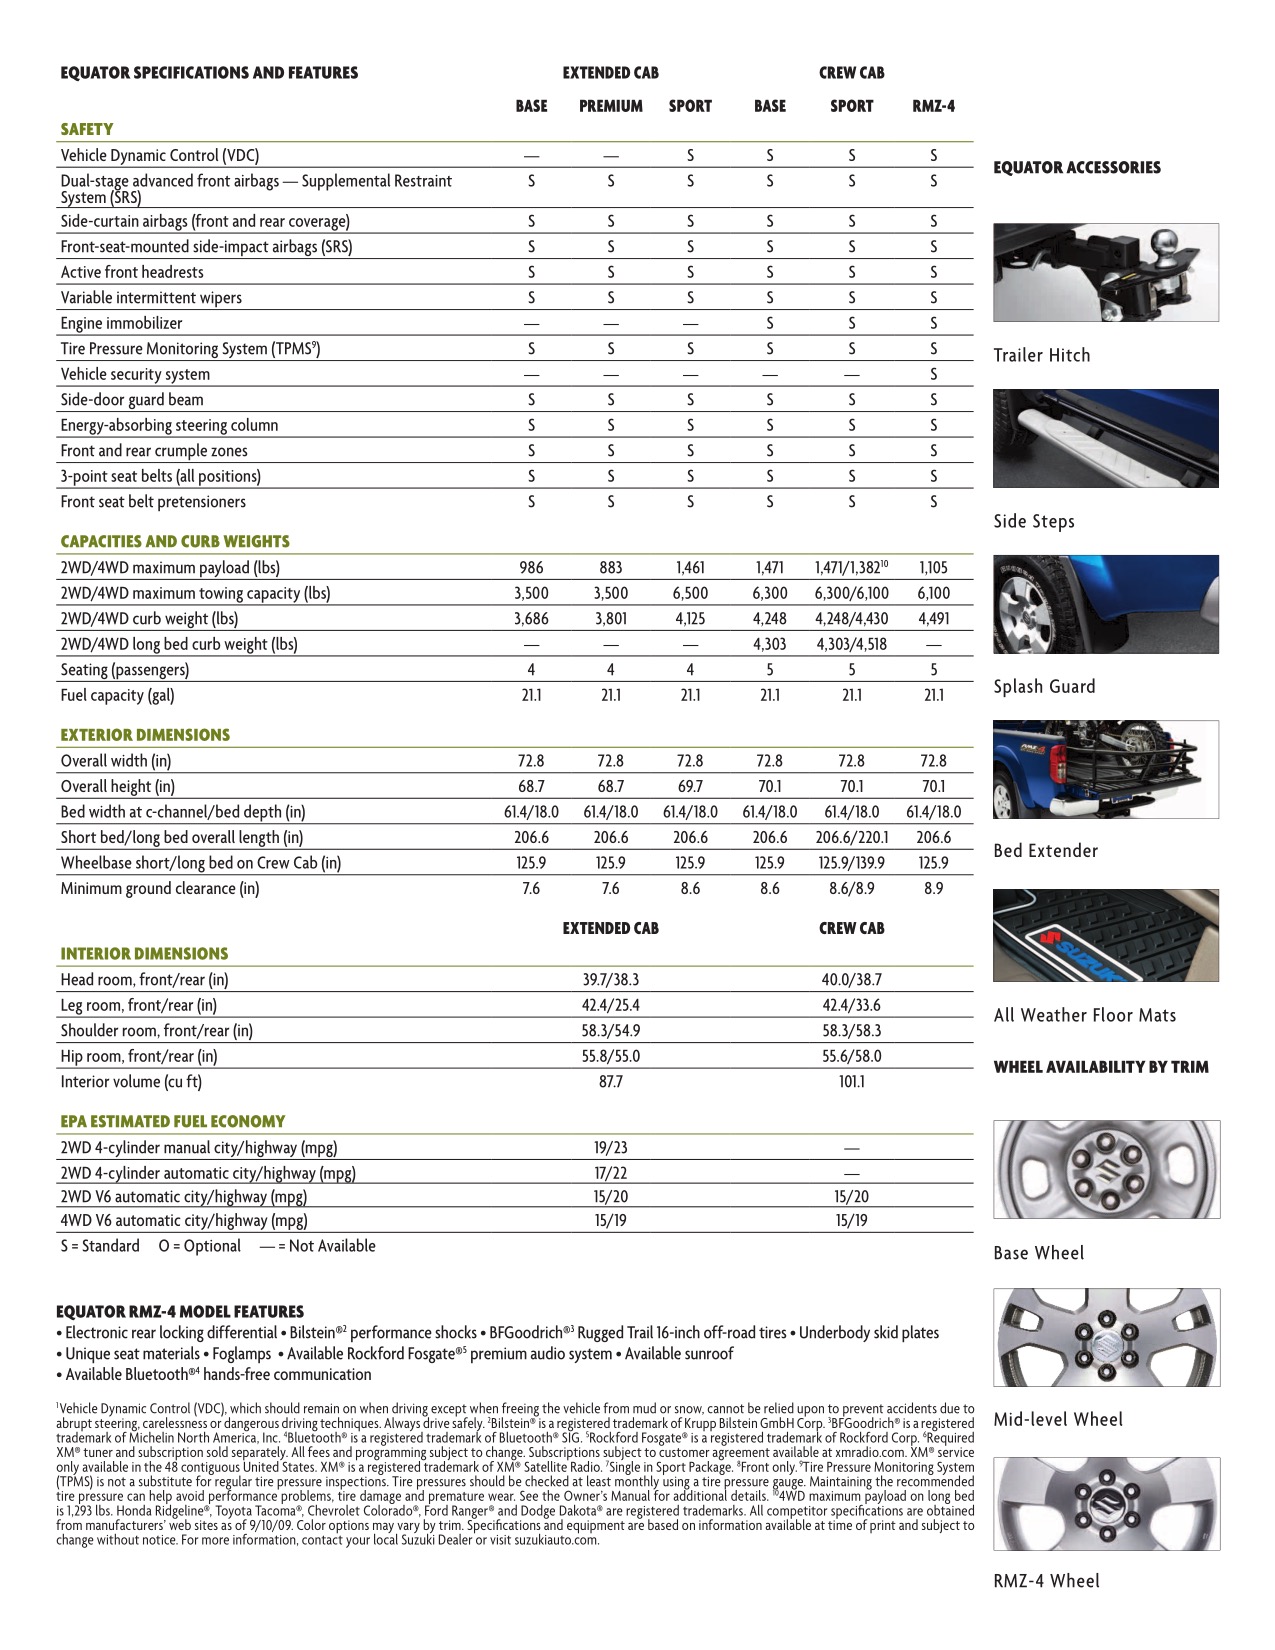 2010 Suzuki Equator Brochure Page 2